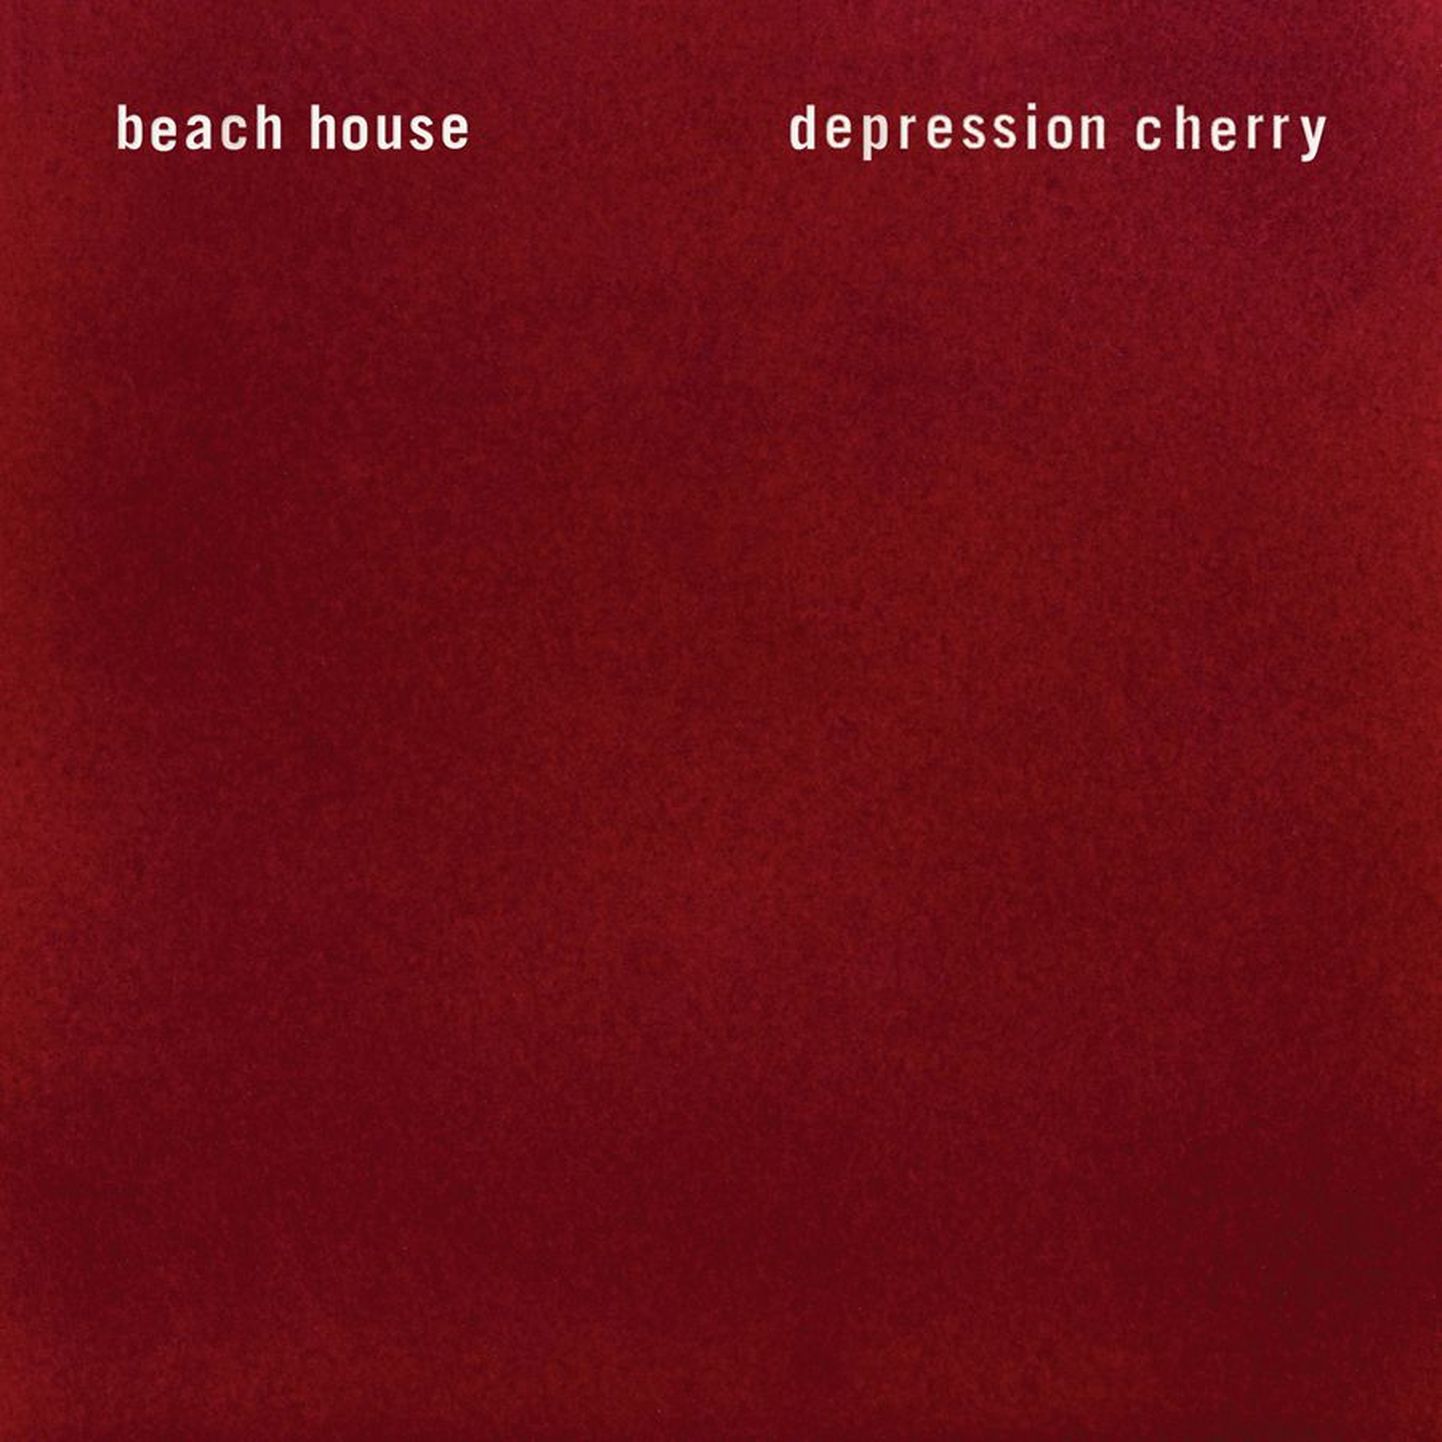 Beach House- Depression Cherry